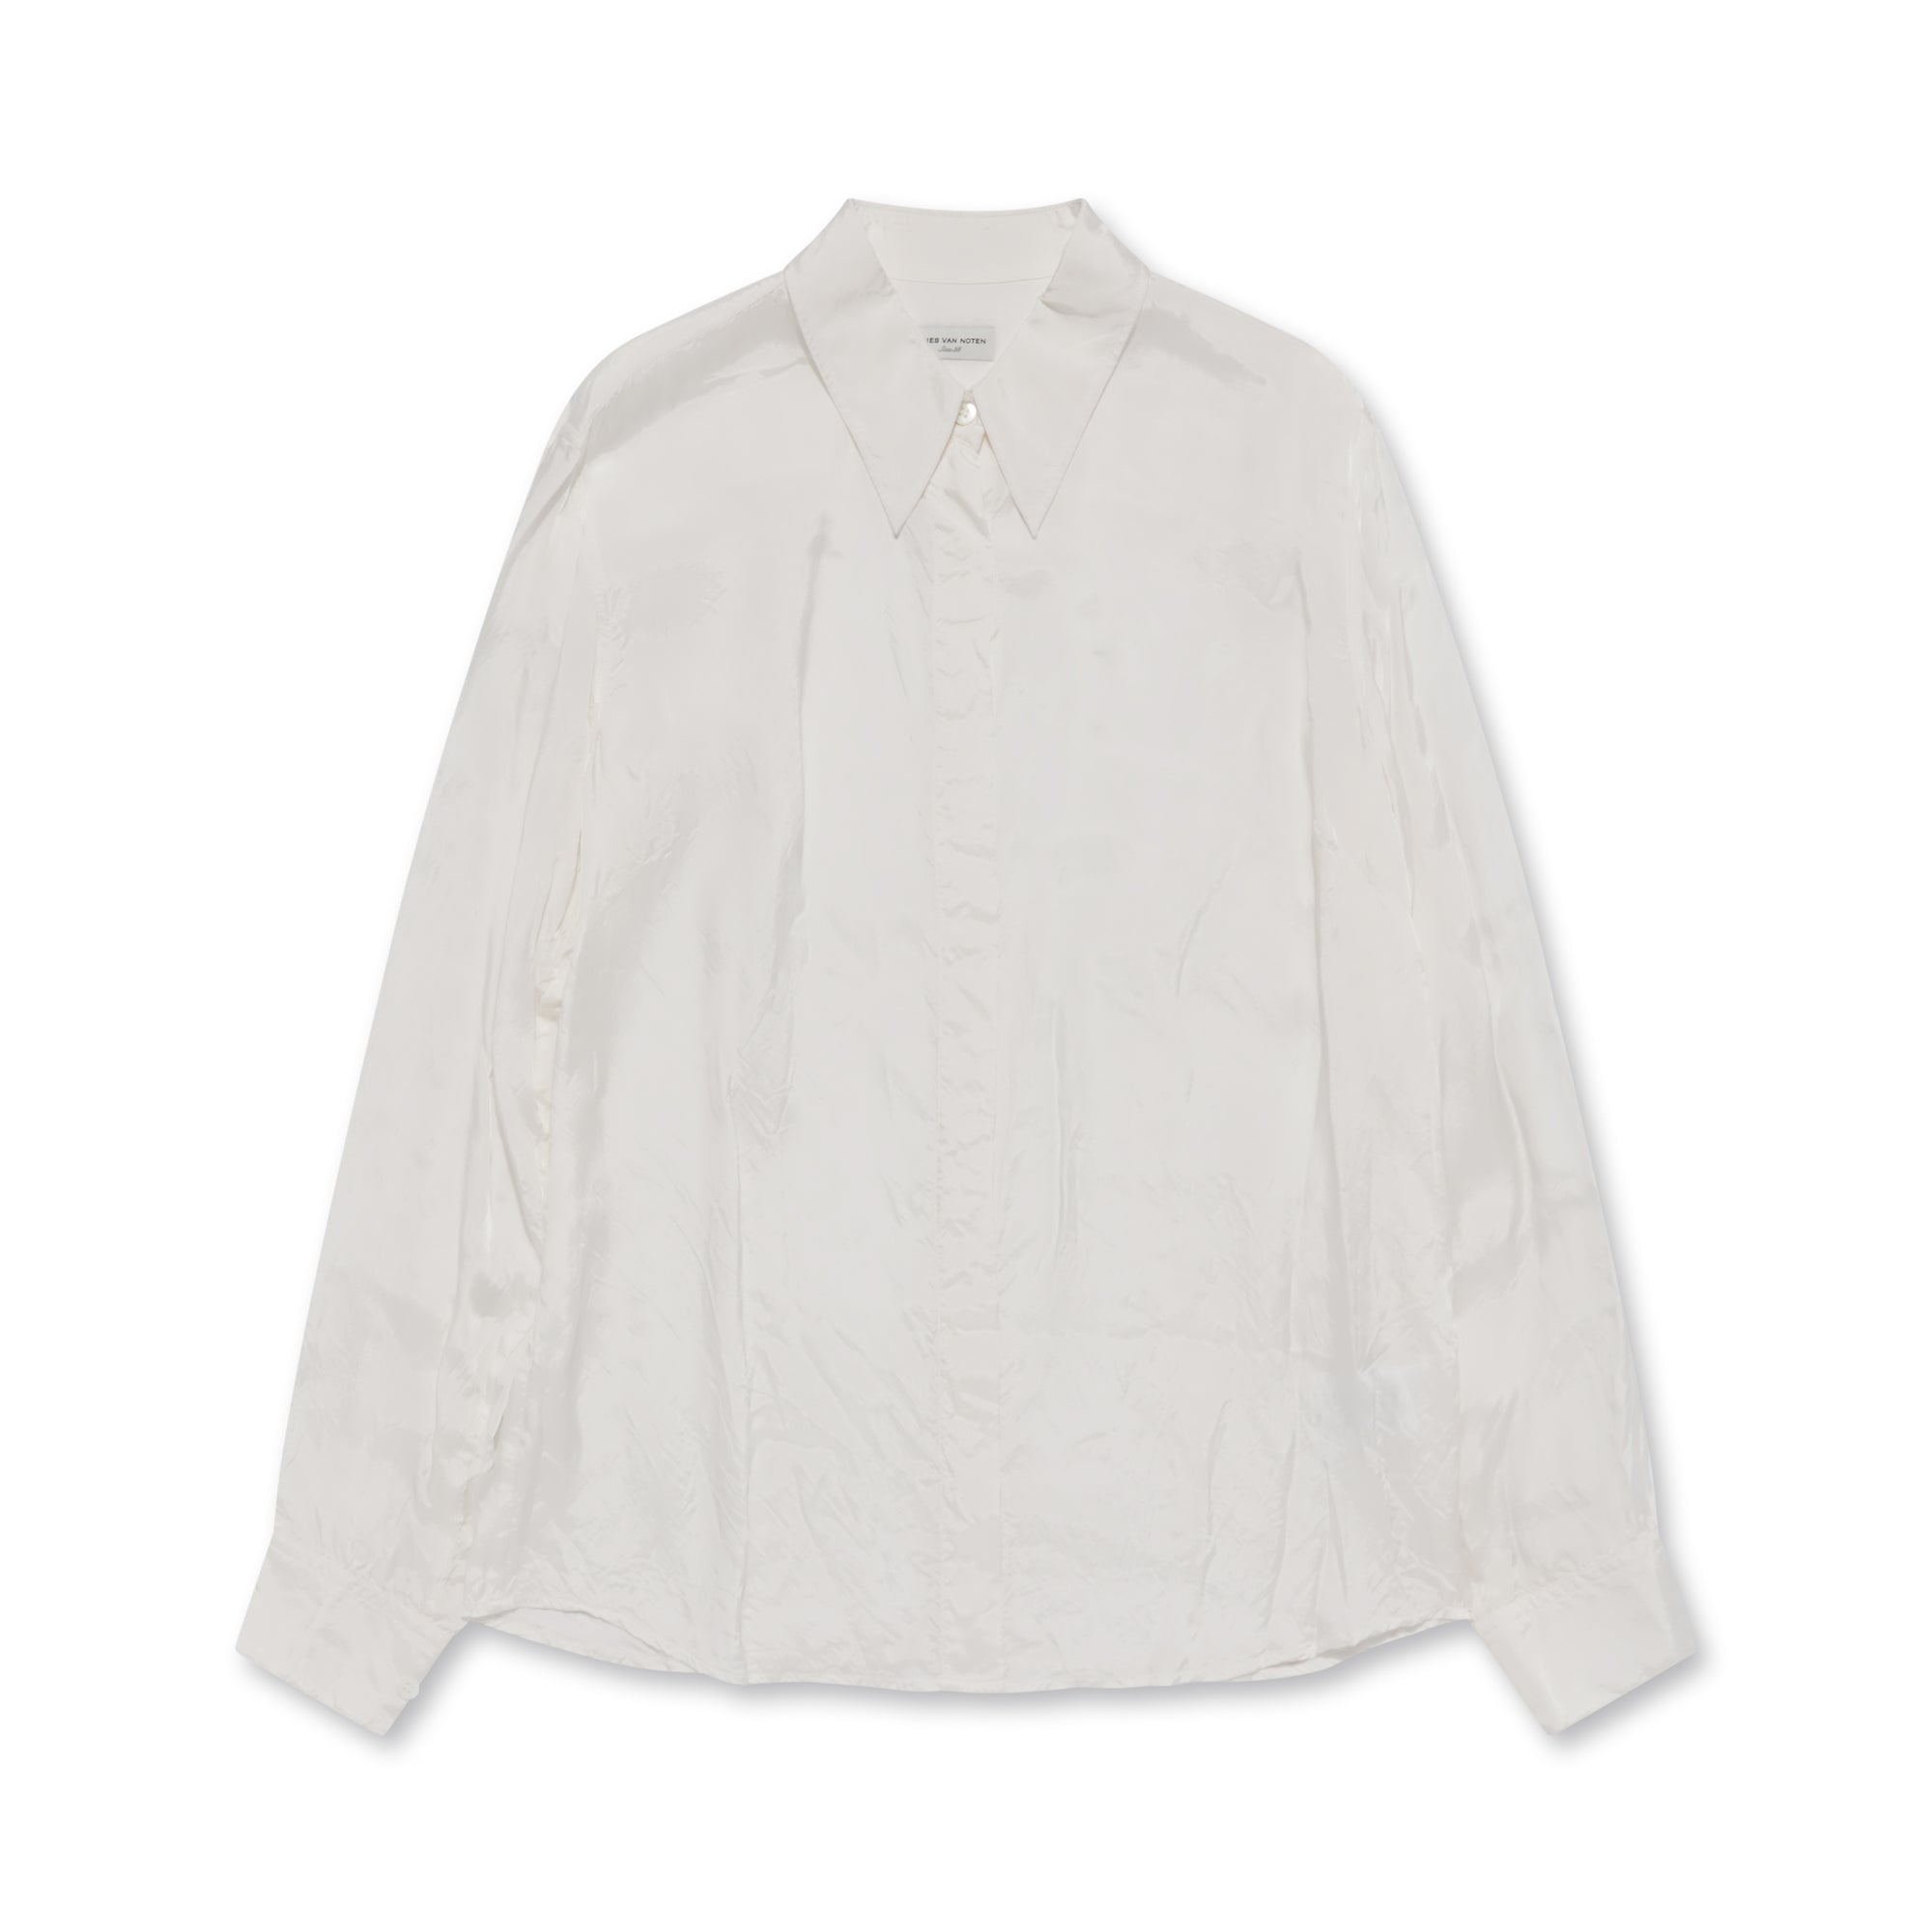 Dries Van Noten - Women's Silk Shirt - (Off White) view 1